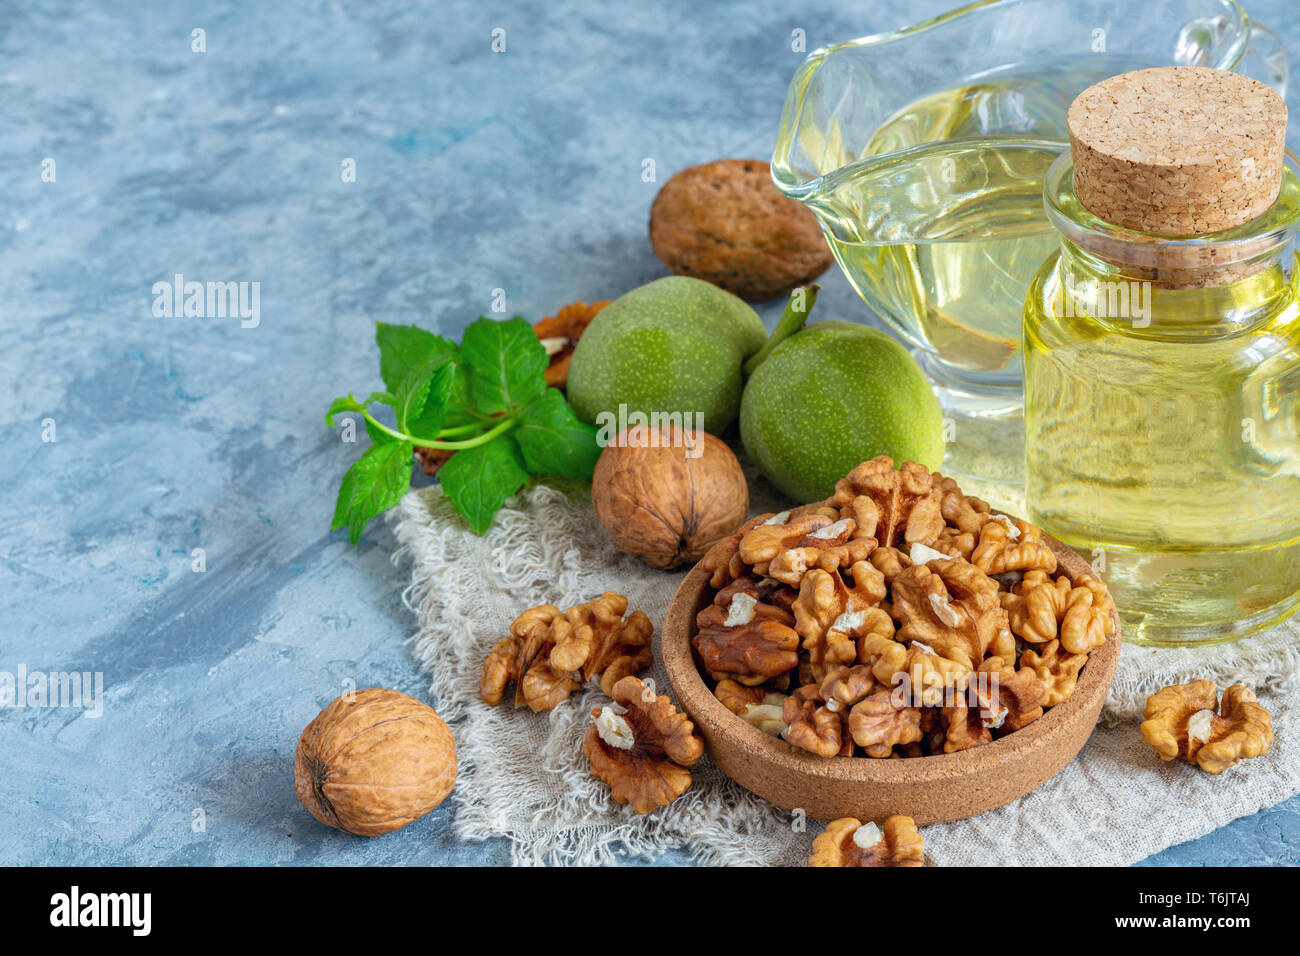 Cold pressed walnut oil and walnut kernel. Stock Photo